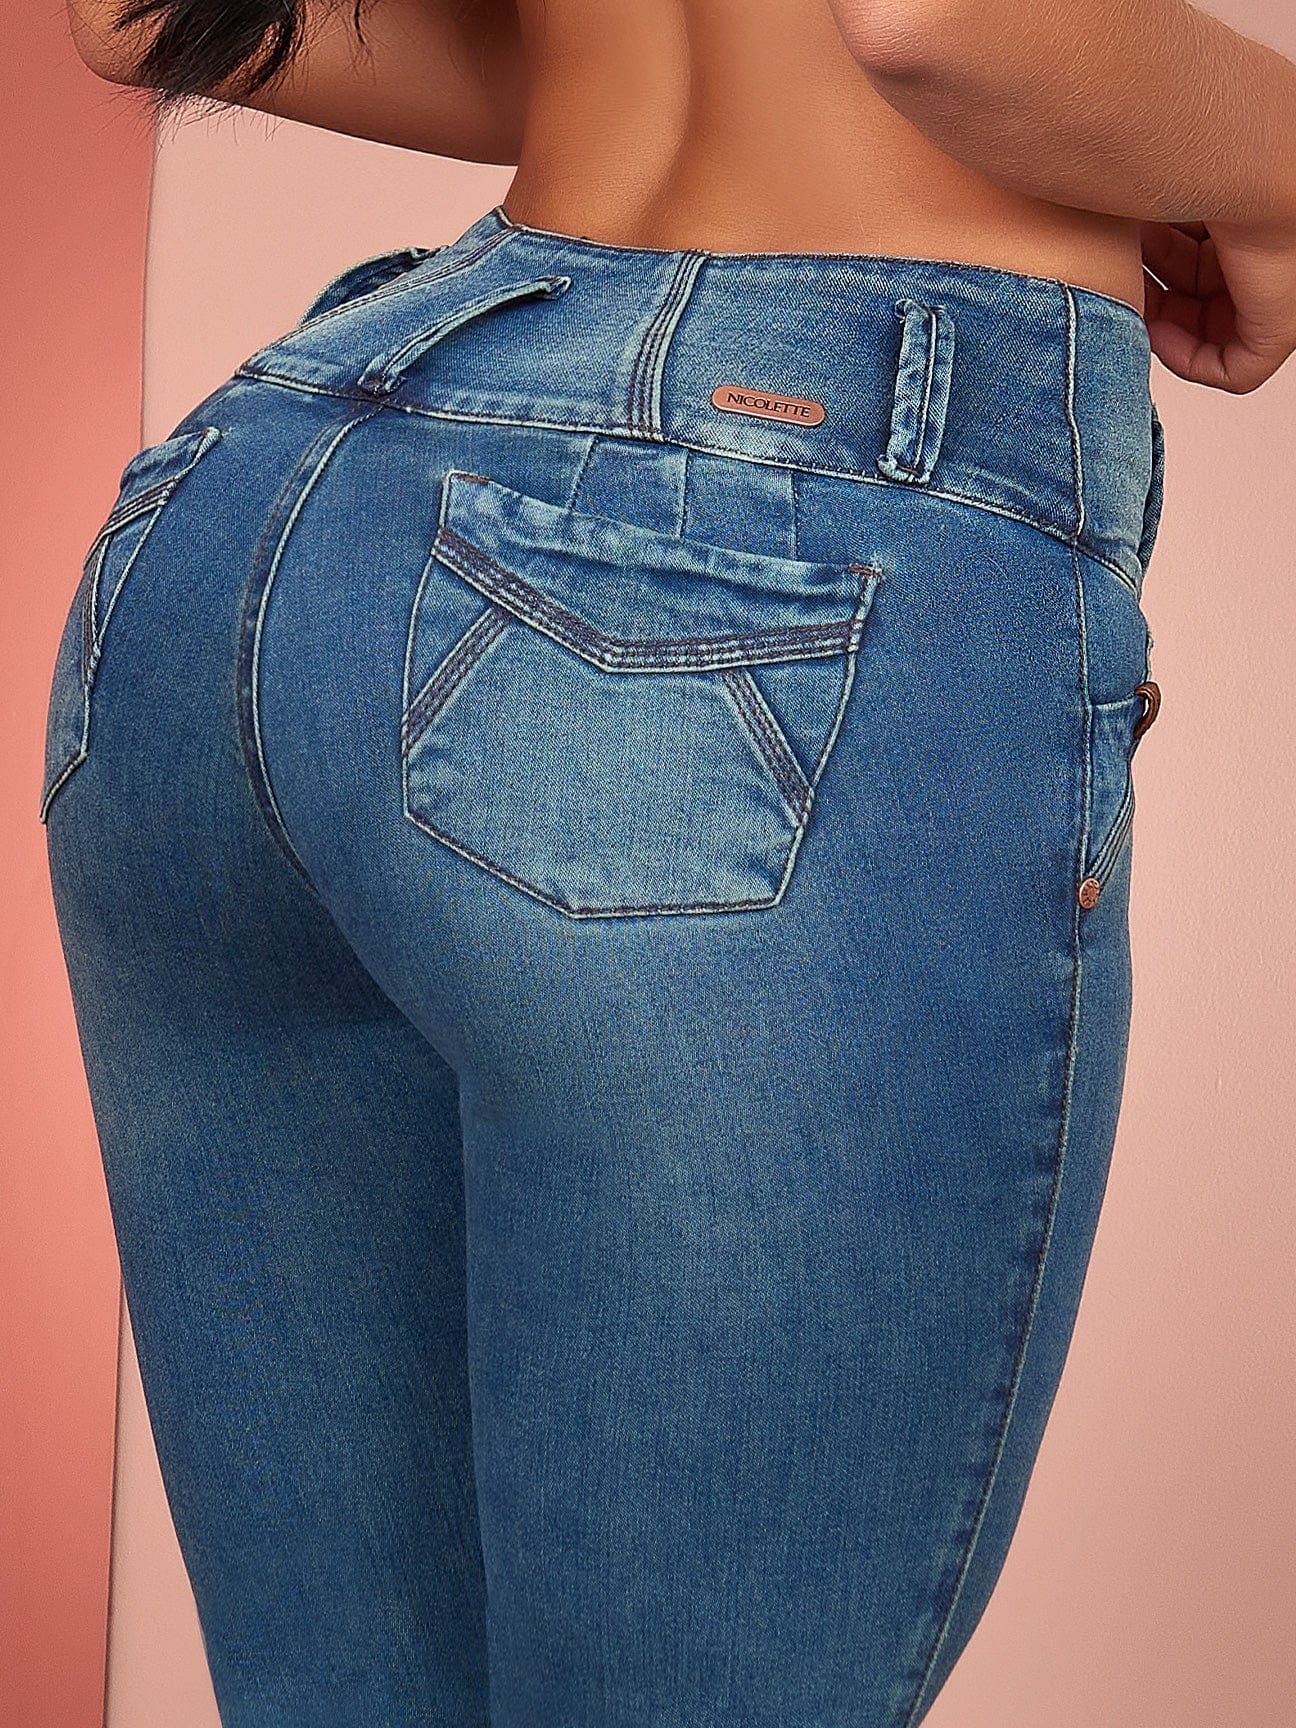 Brazilian Butt Lift Jeans- Size 3/4 USA (38Brazil ) Flare Jeans